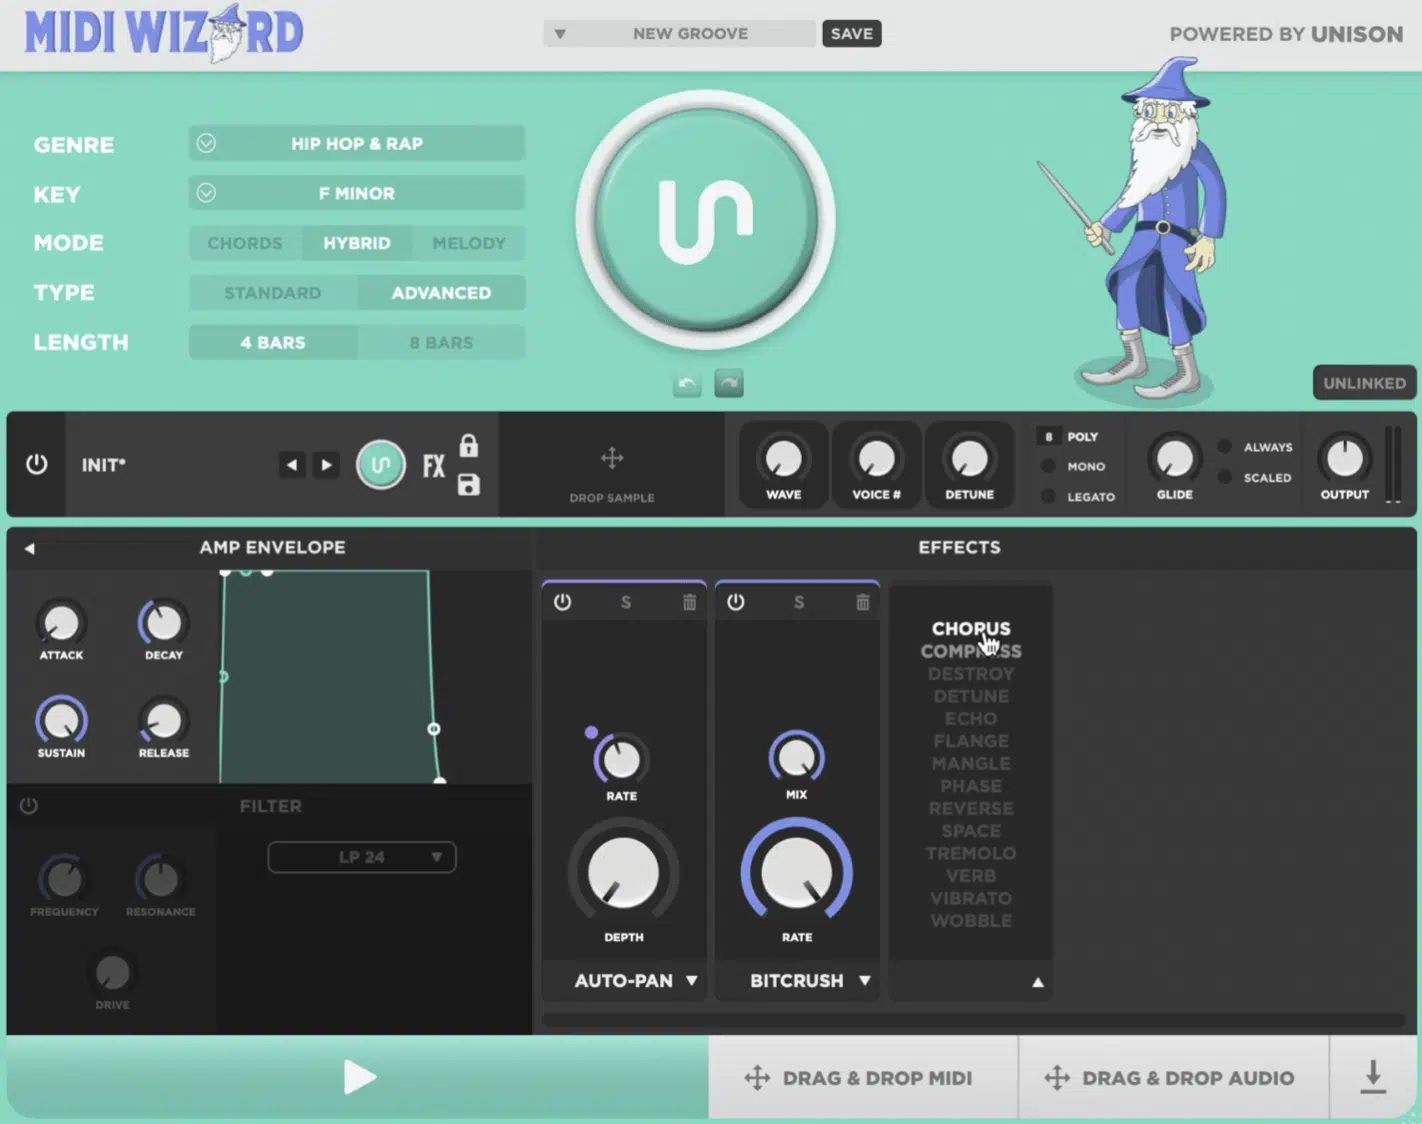 FX Features MIDI Wizard - Unison